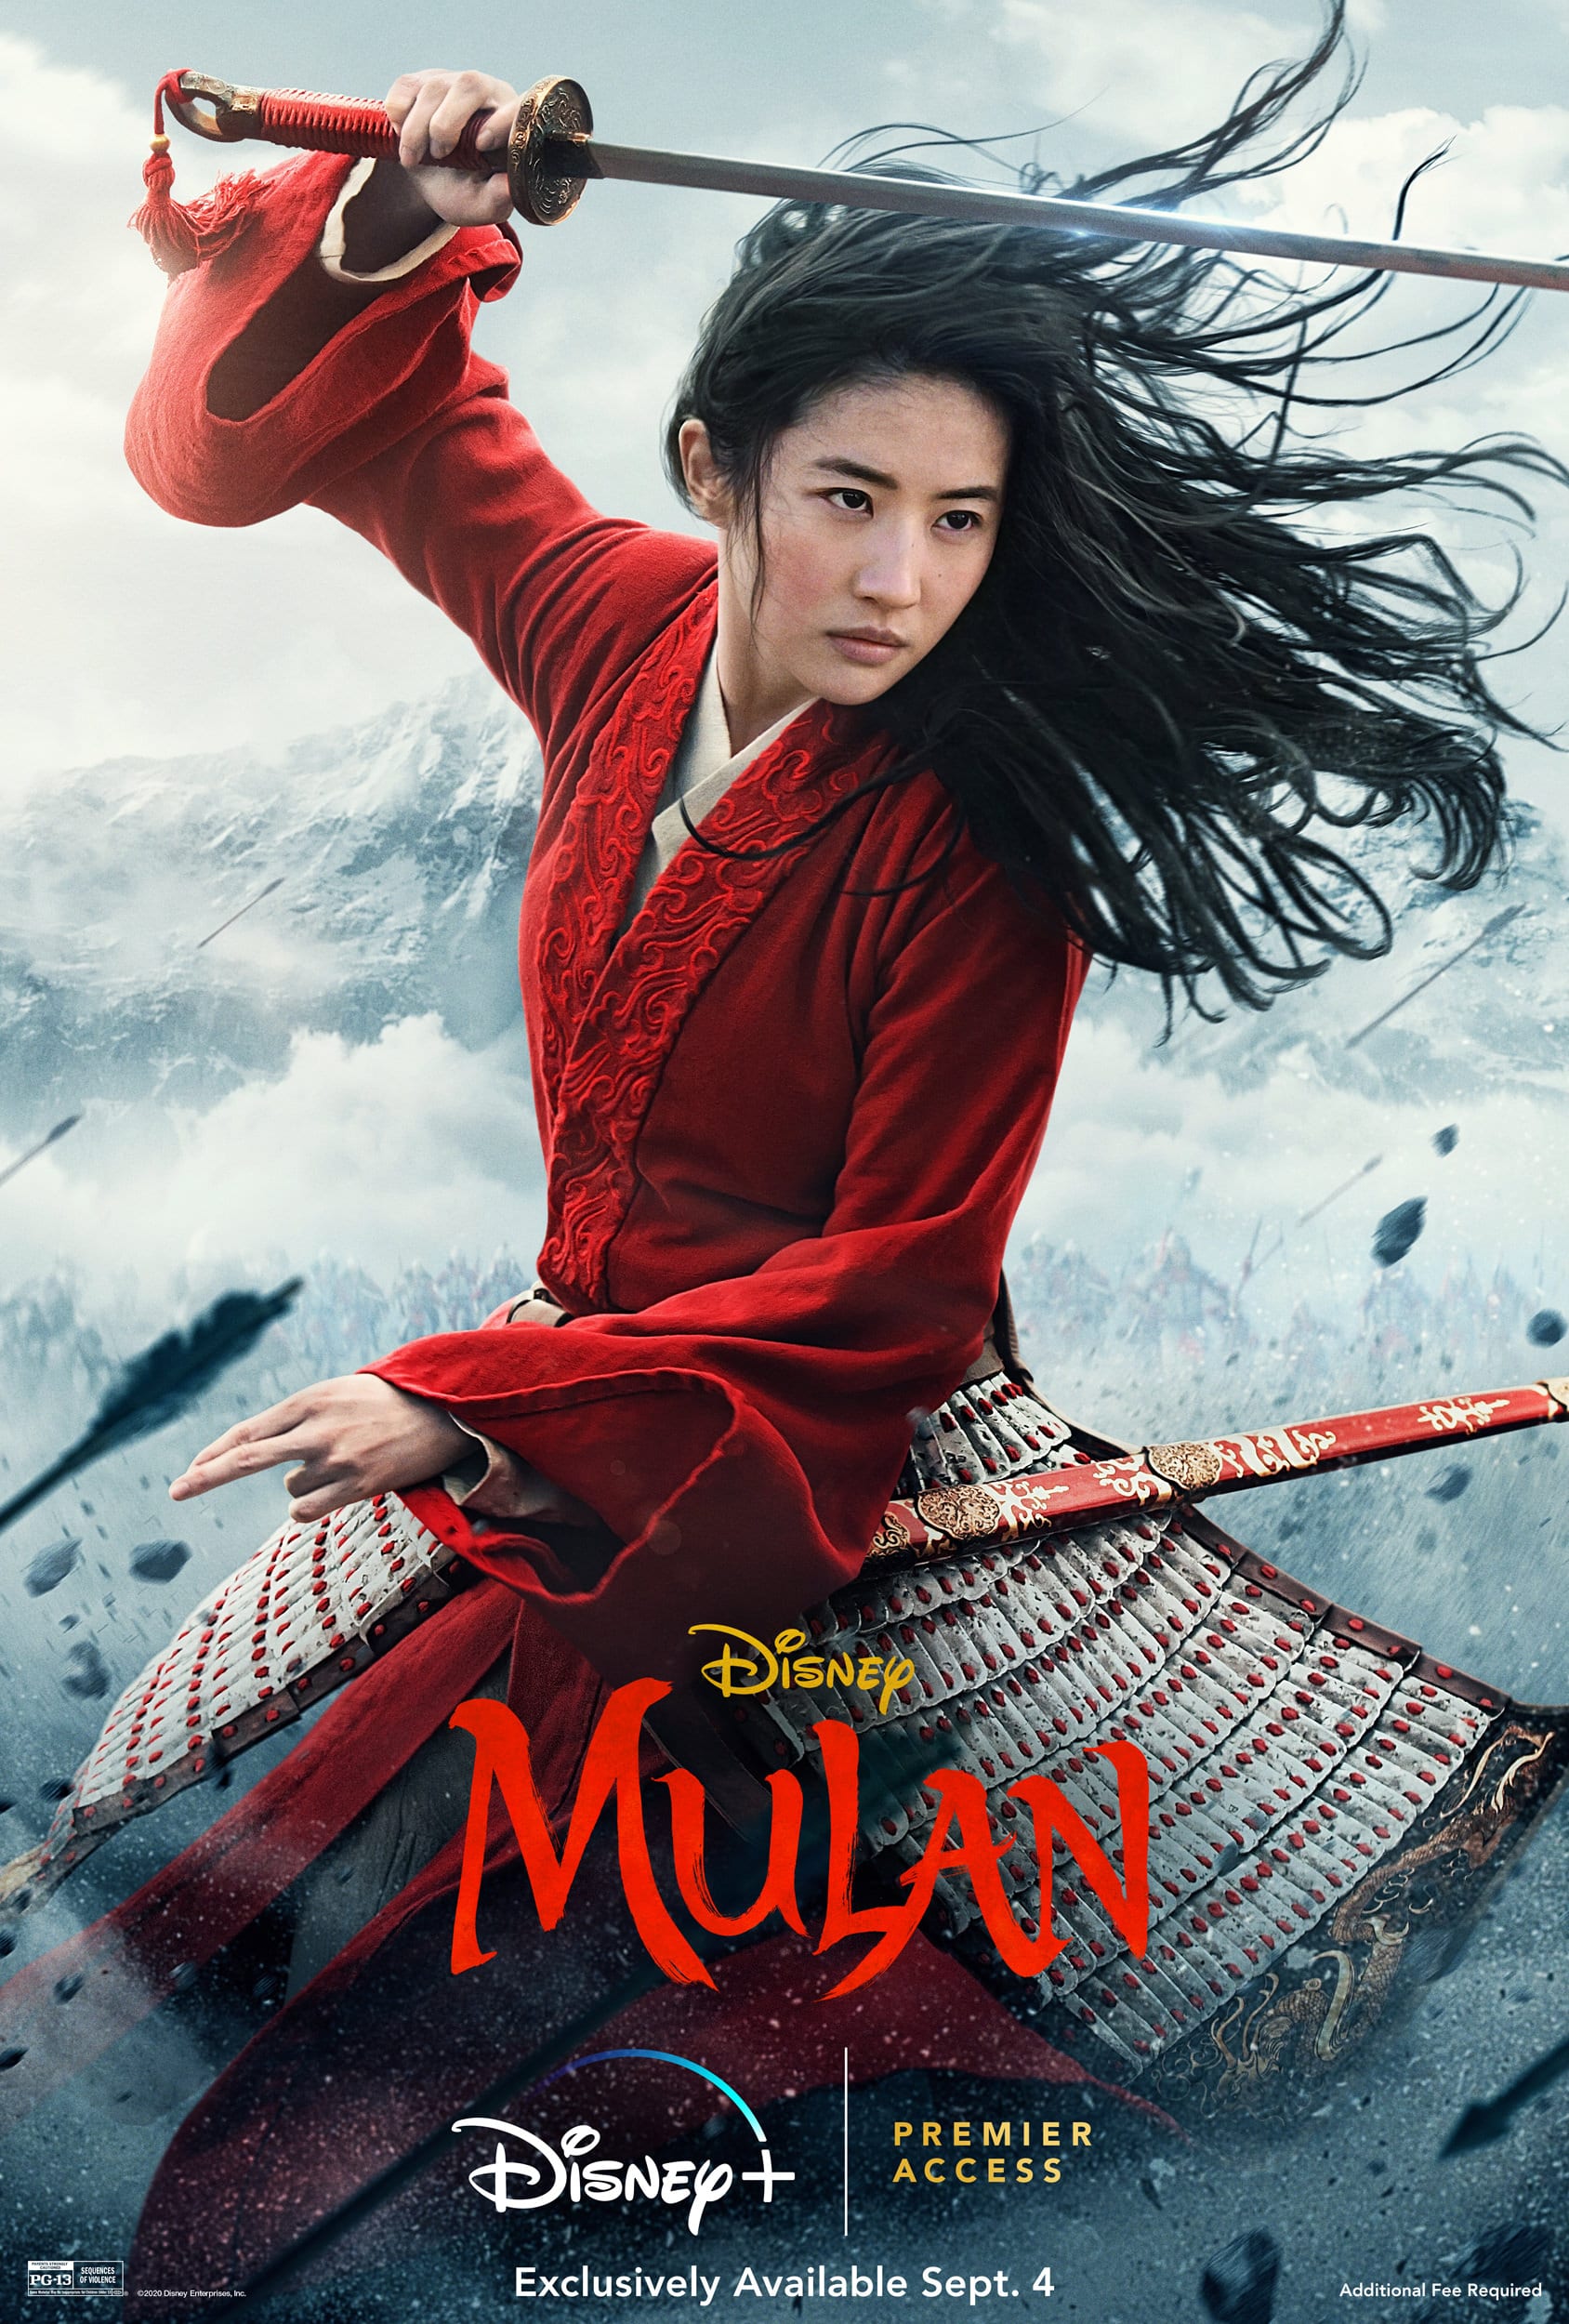 Mulan Poster Art provided by Disney